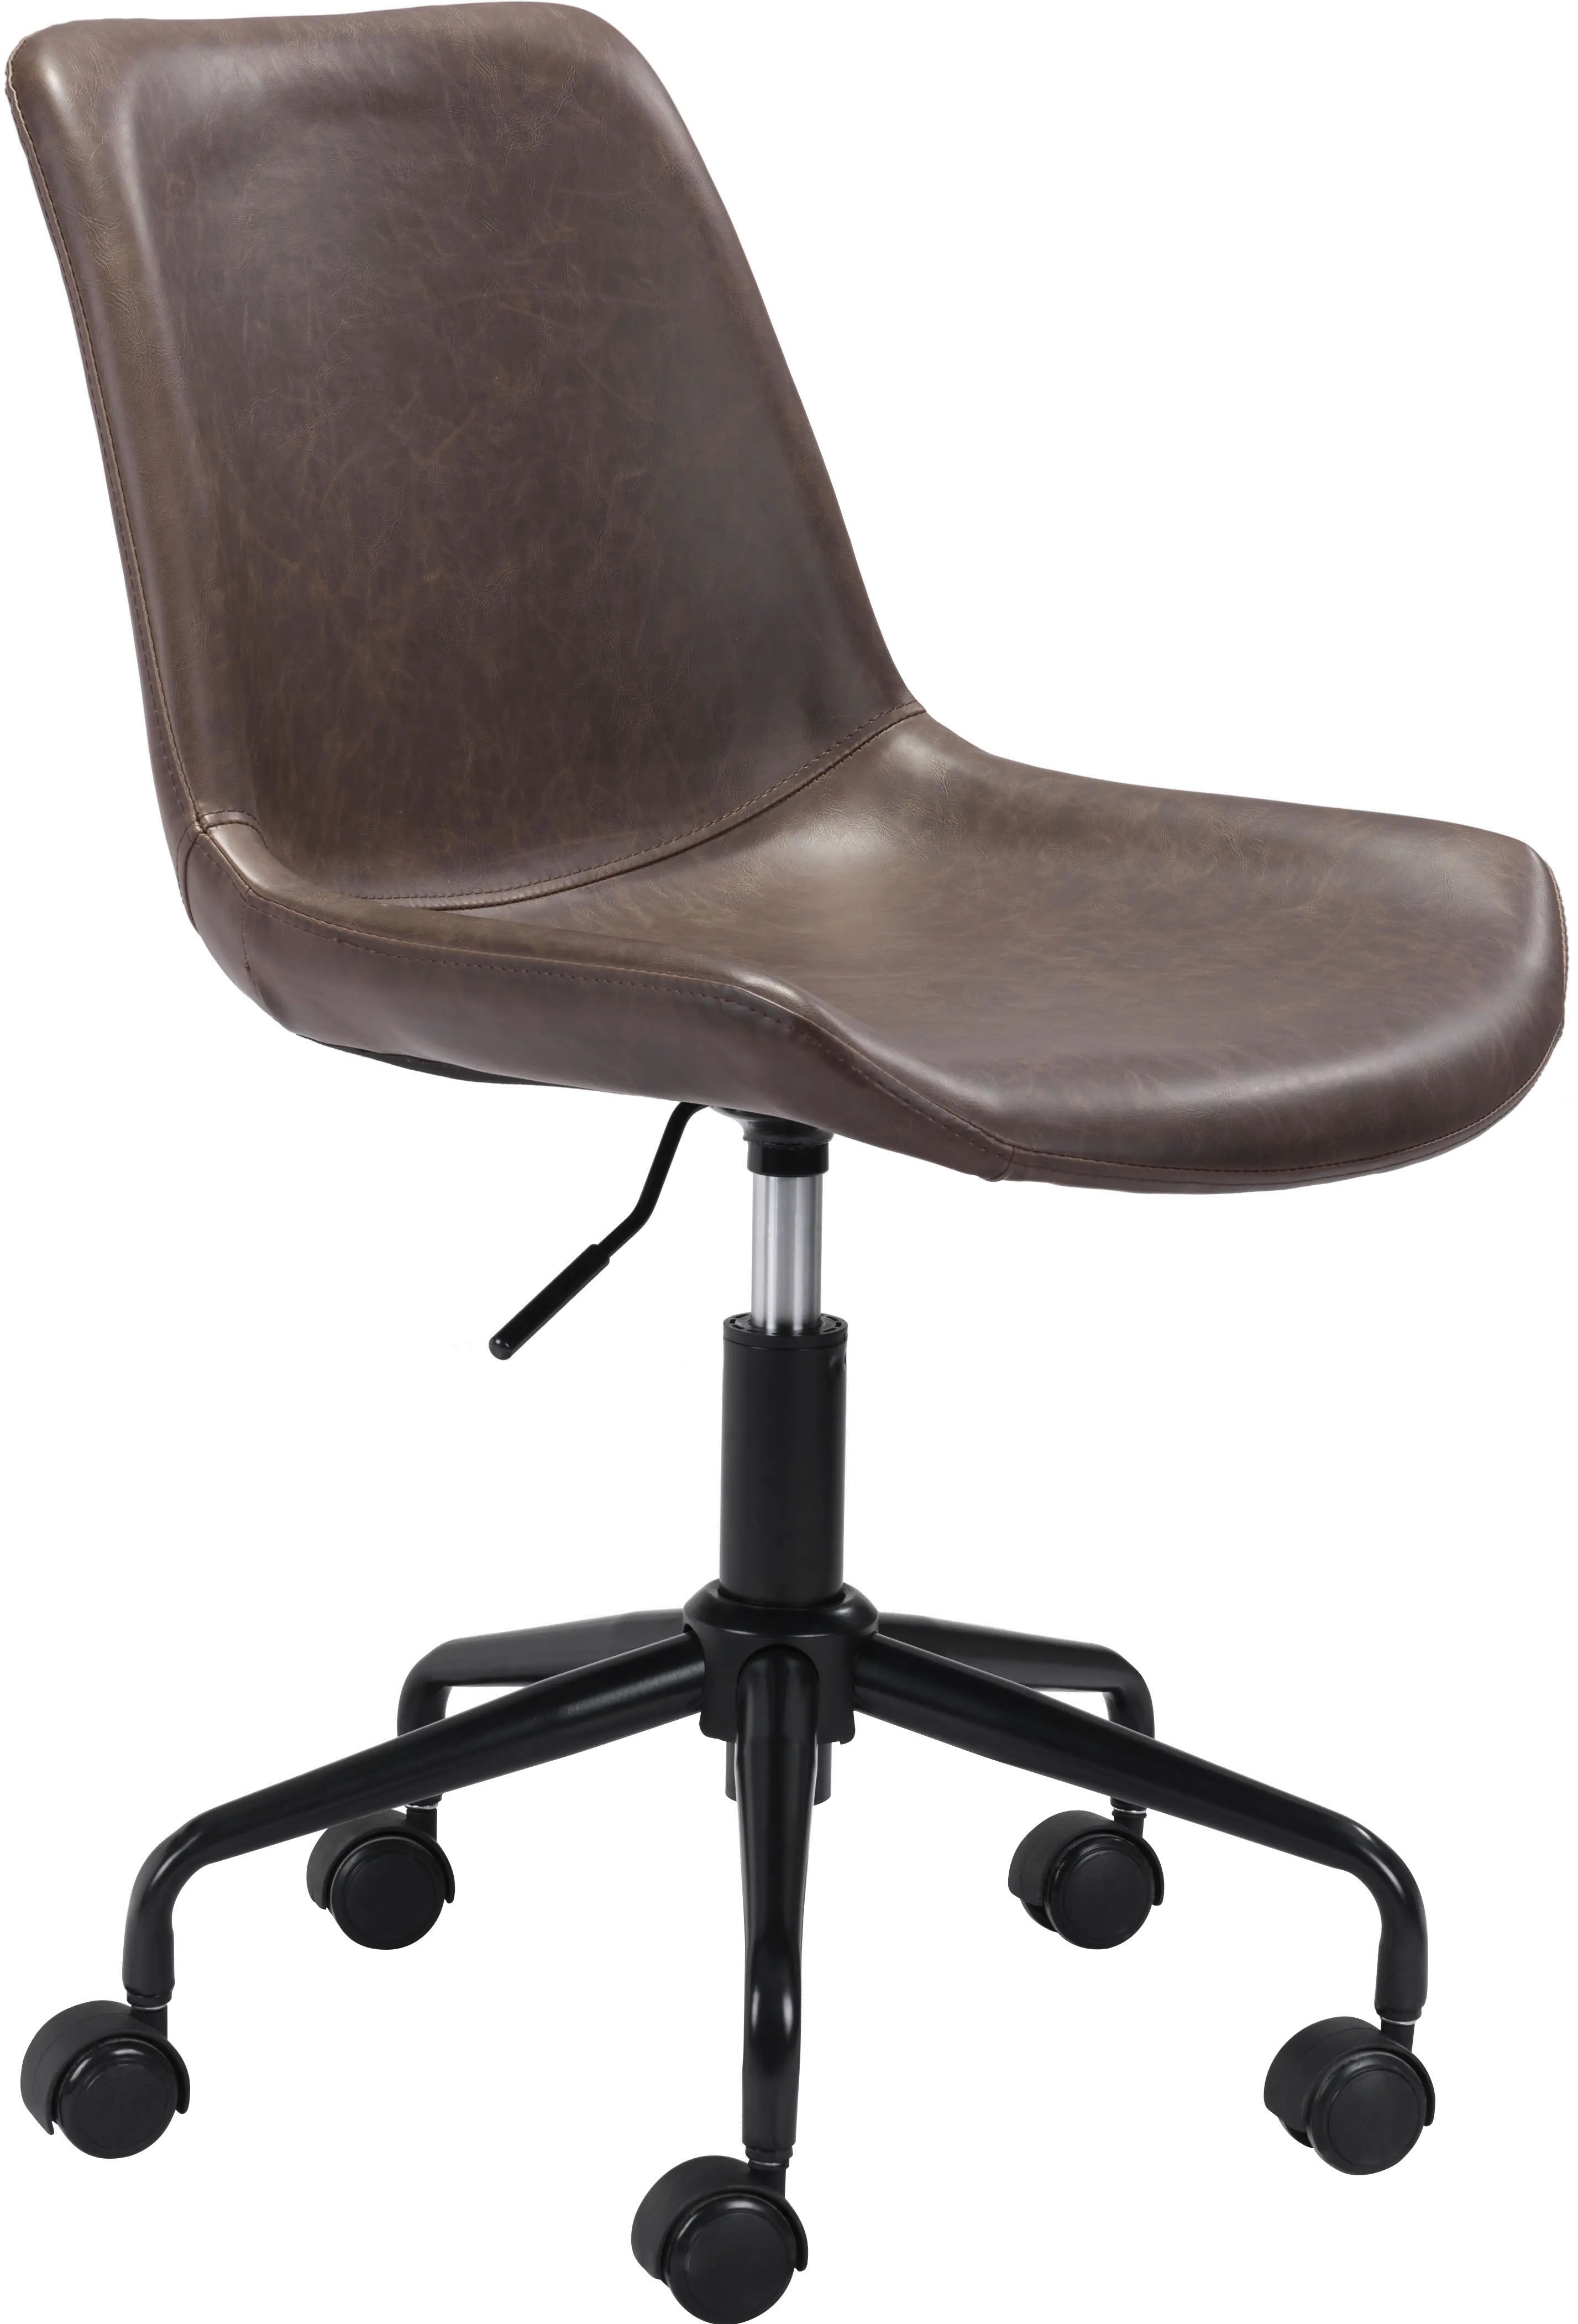 Photos - Chair Zuo Modern Mid-century Modern Brown Office  101780